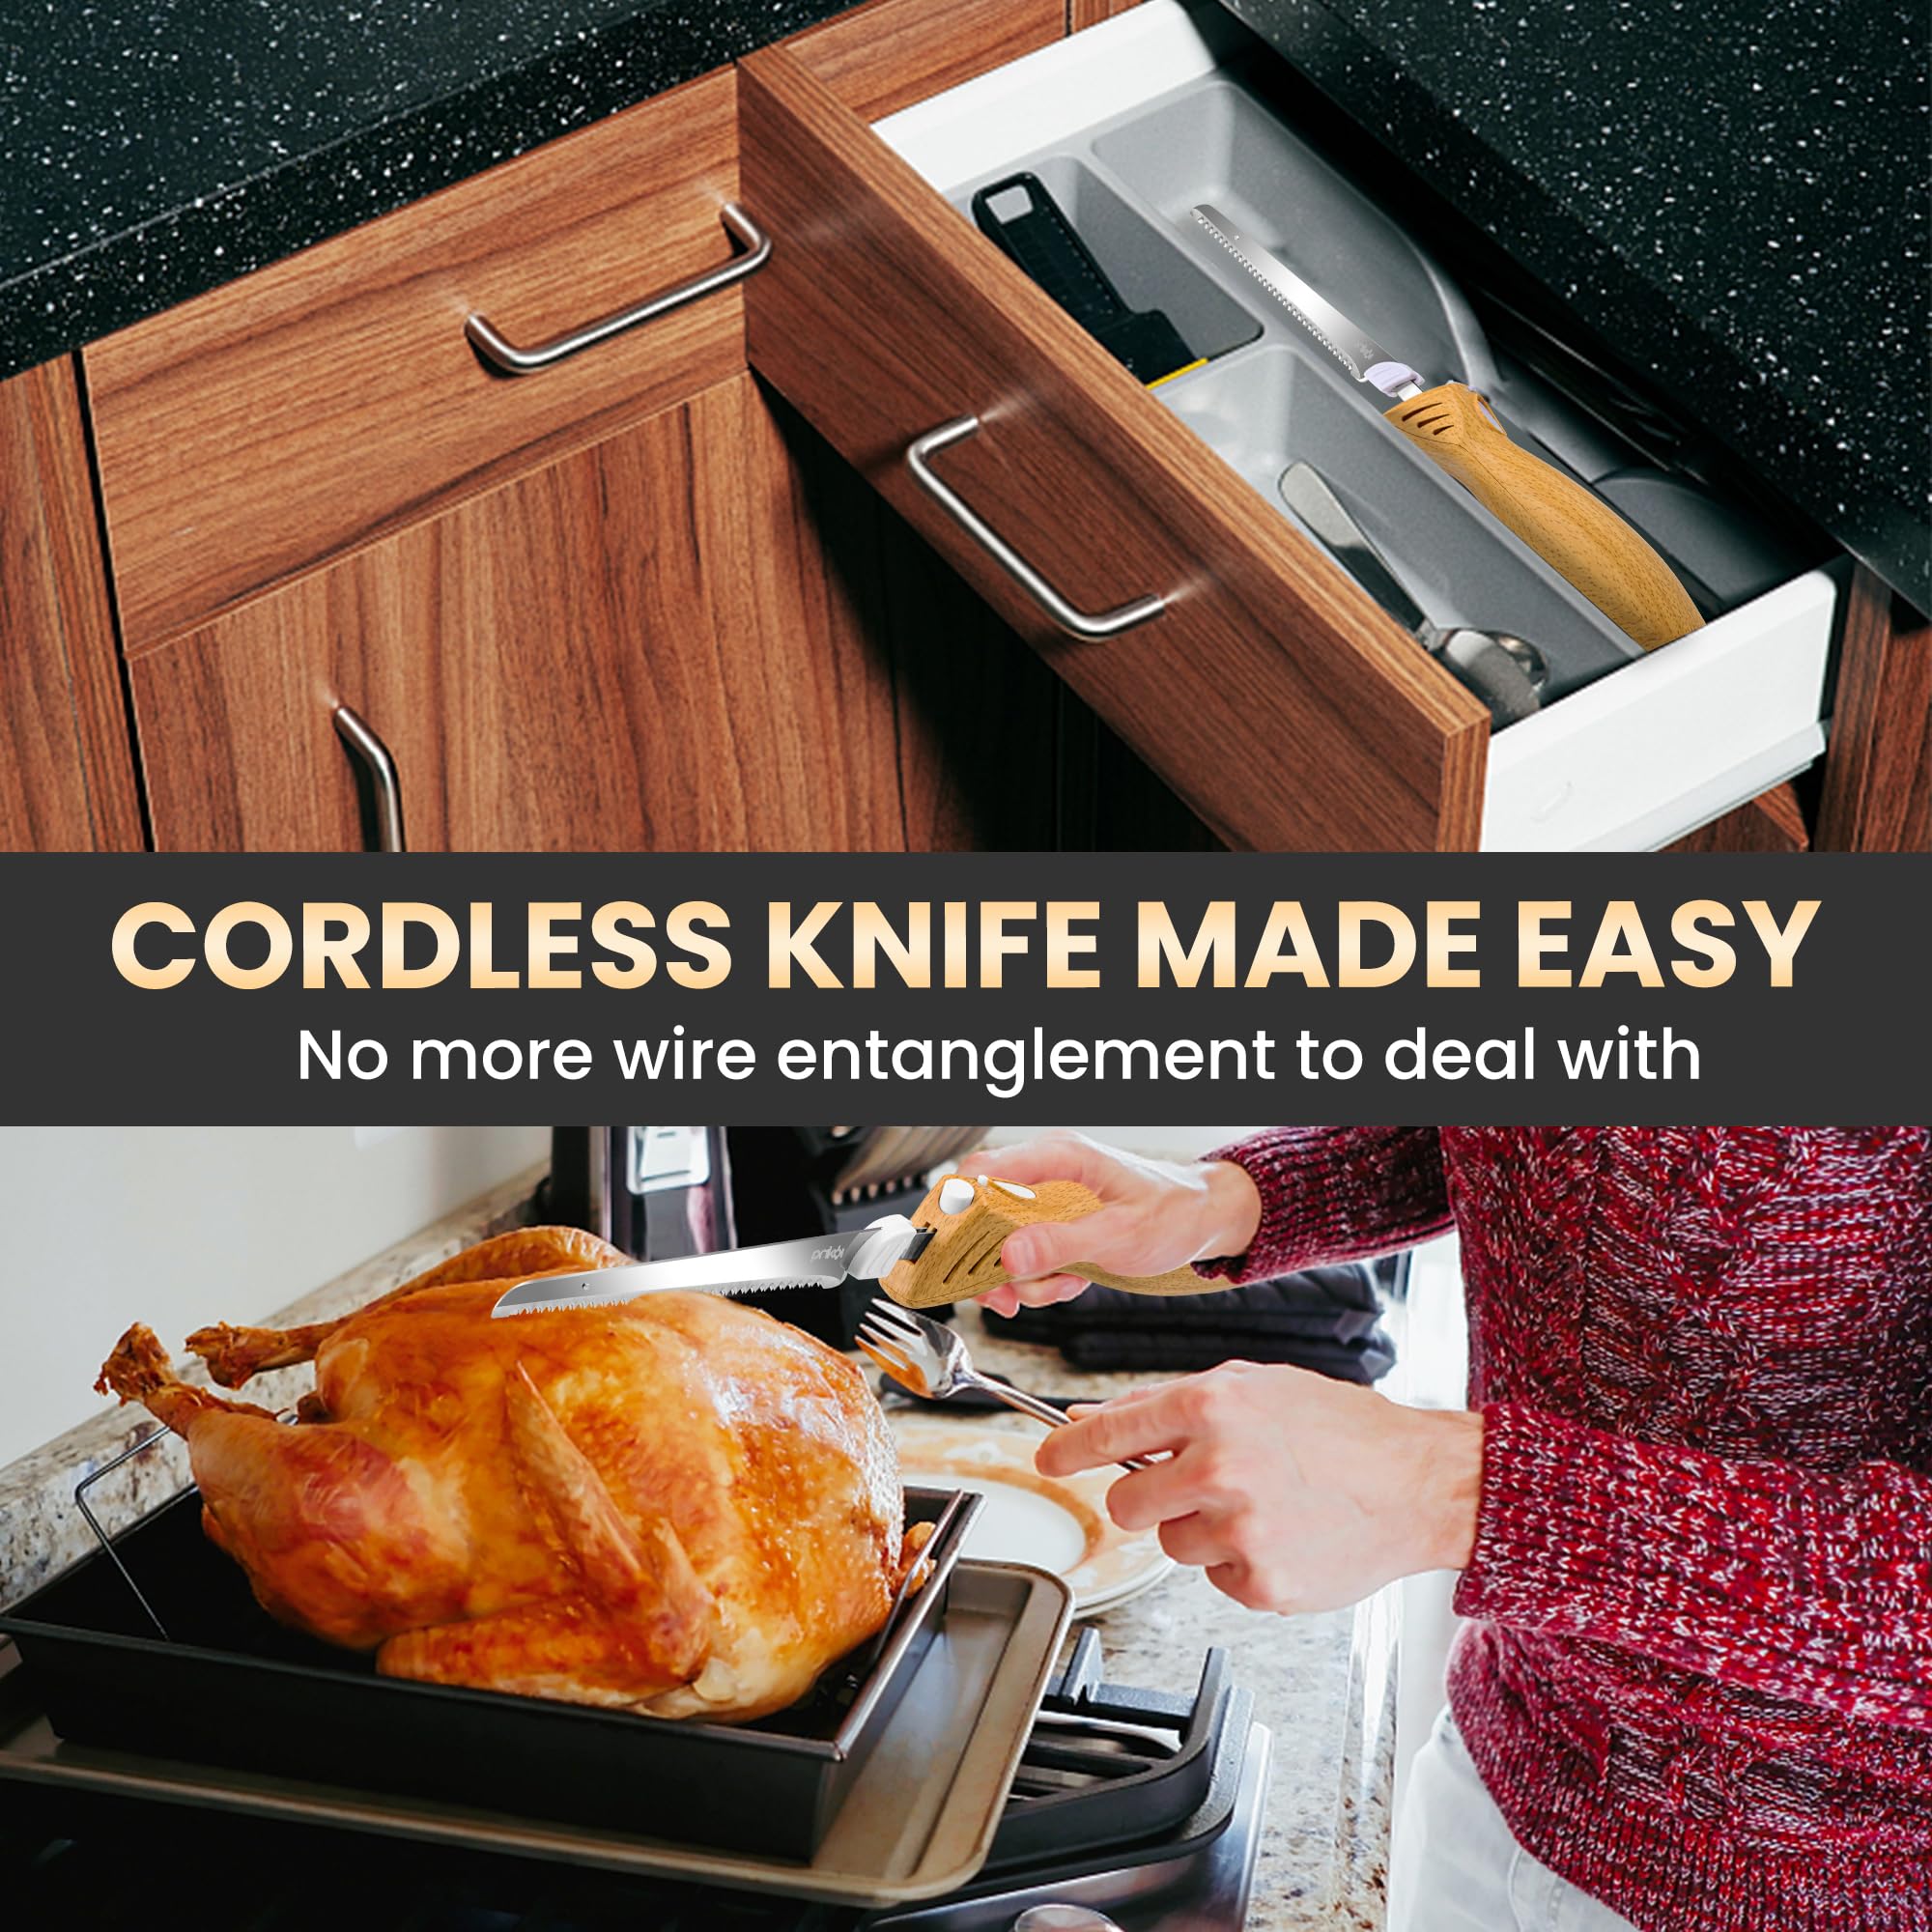 Prikoi Cordless Electric Knife, Easy-Slice Serrated Edge Blades for Carving Turkey, Bread, Fillet, DIY, Ergonomic Handle + 2 Blades